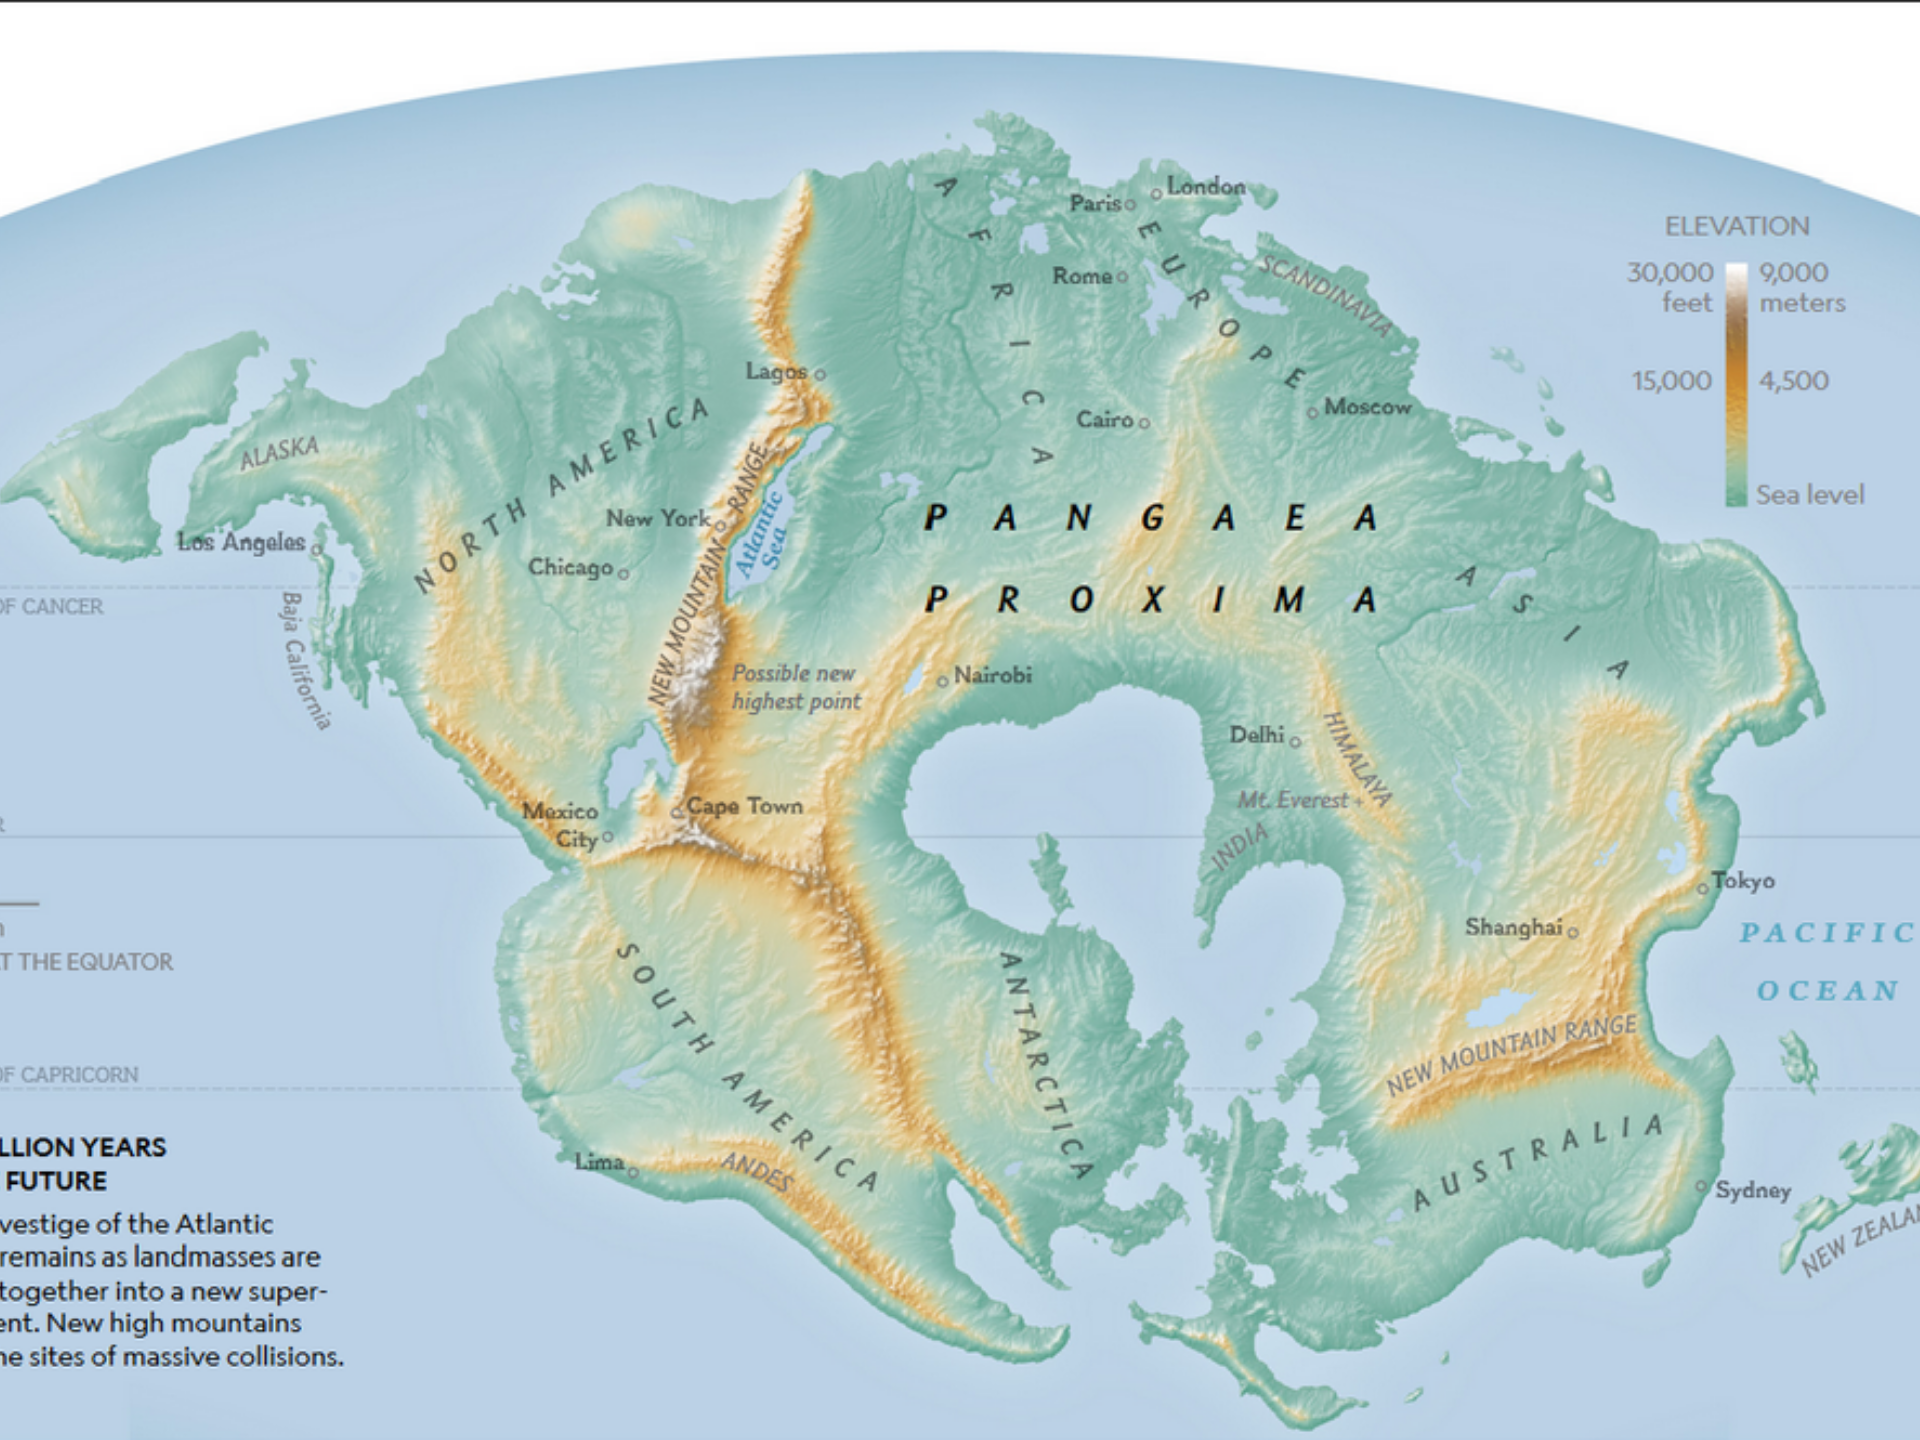 Pangea Proxima